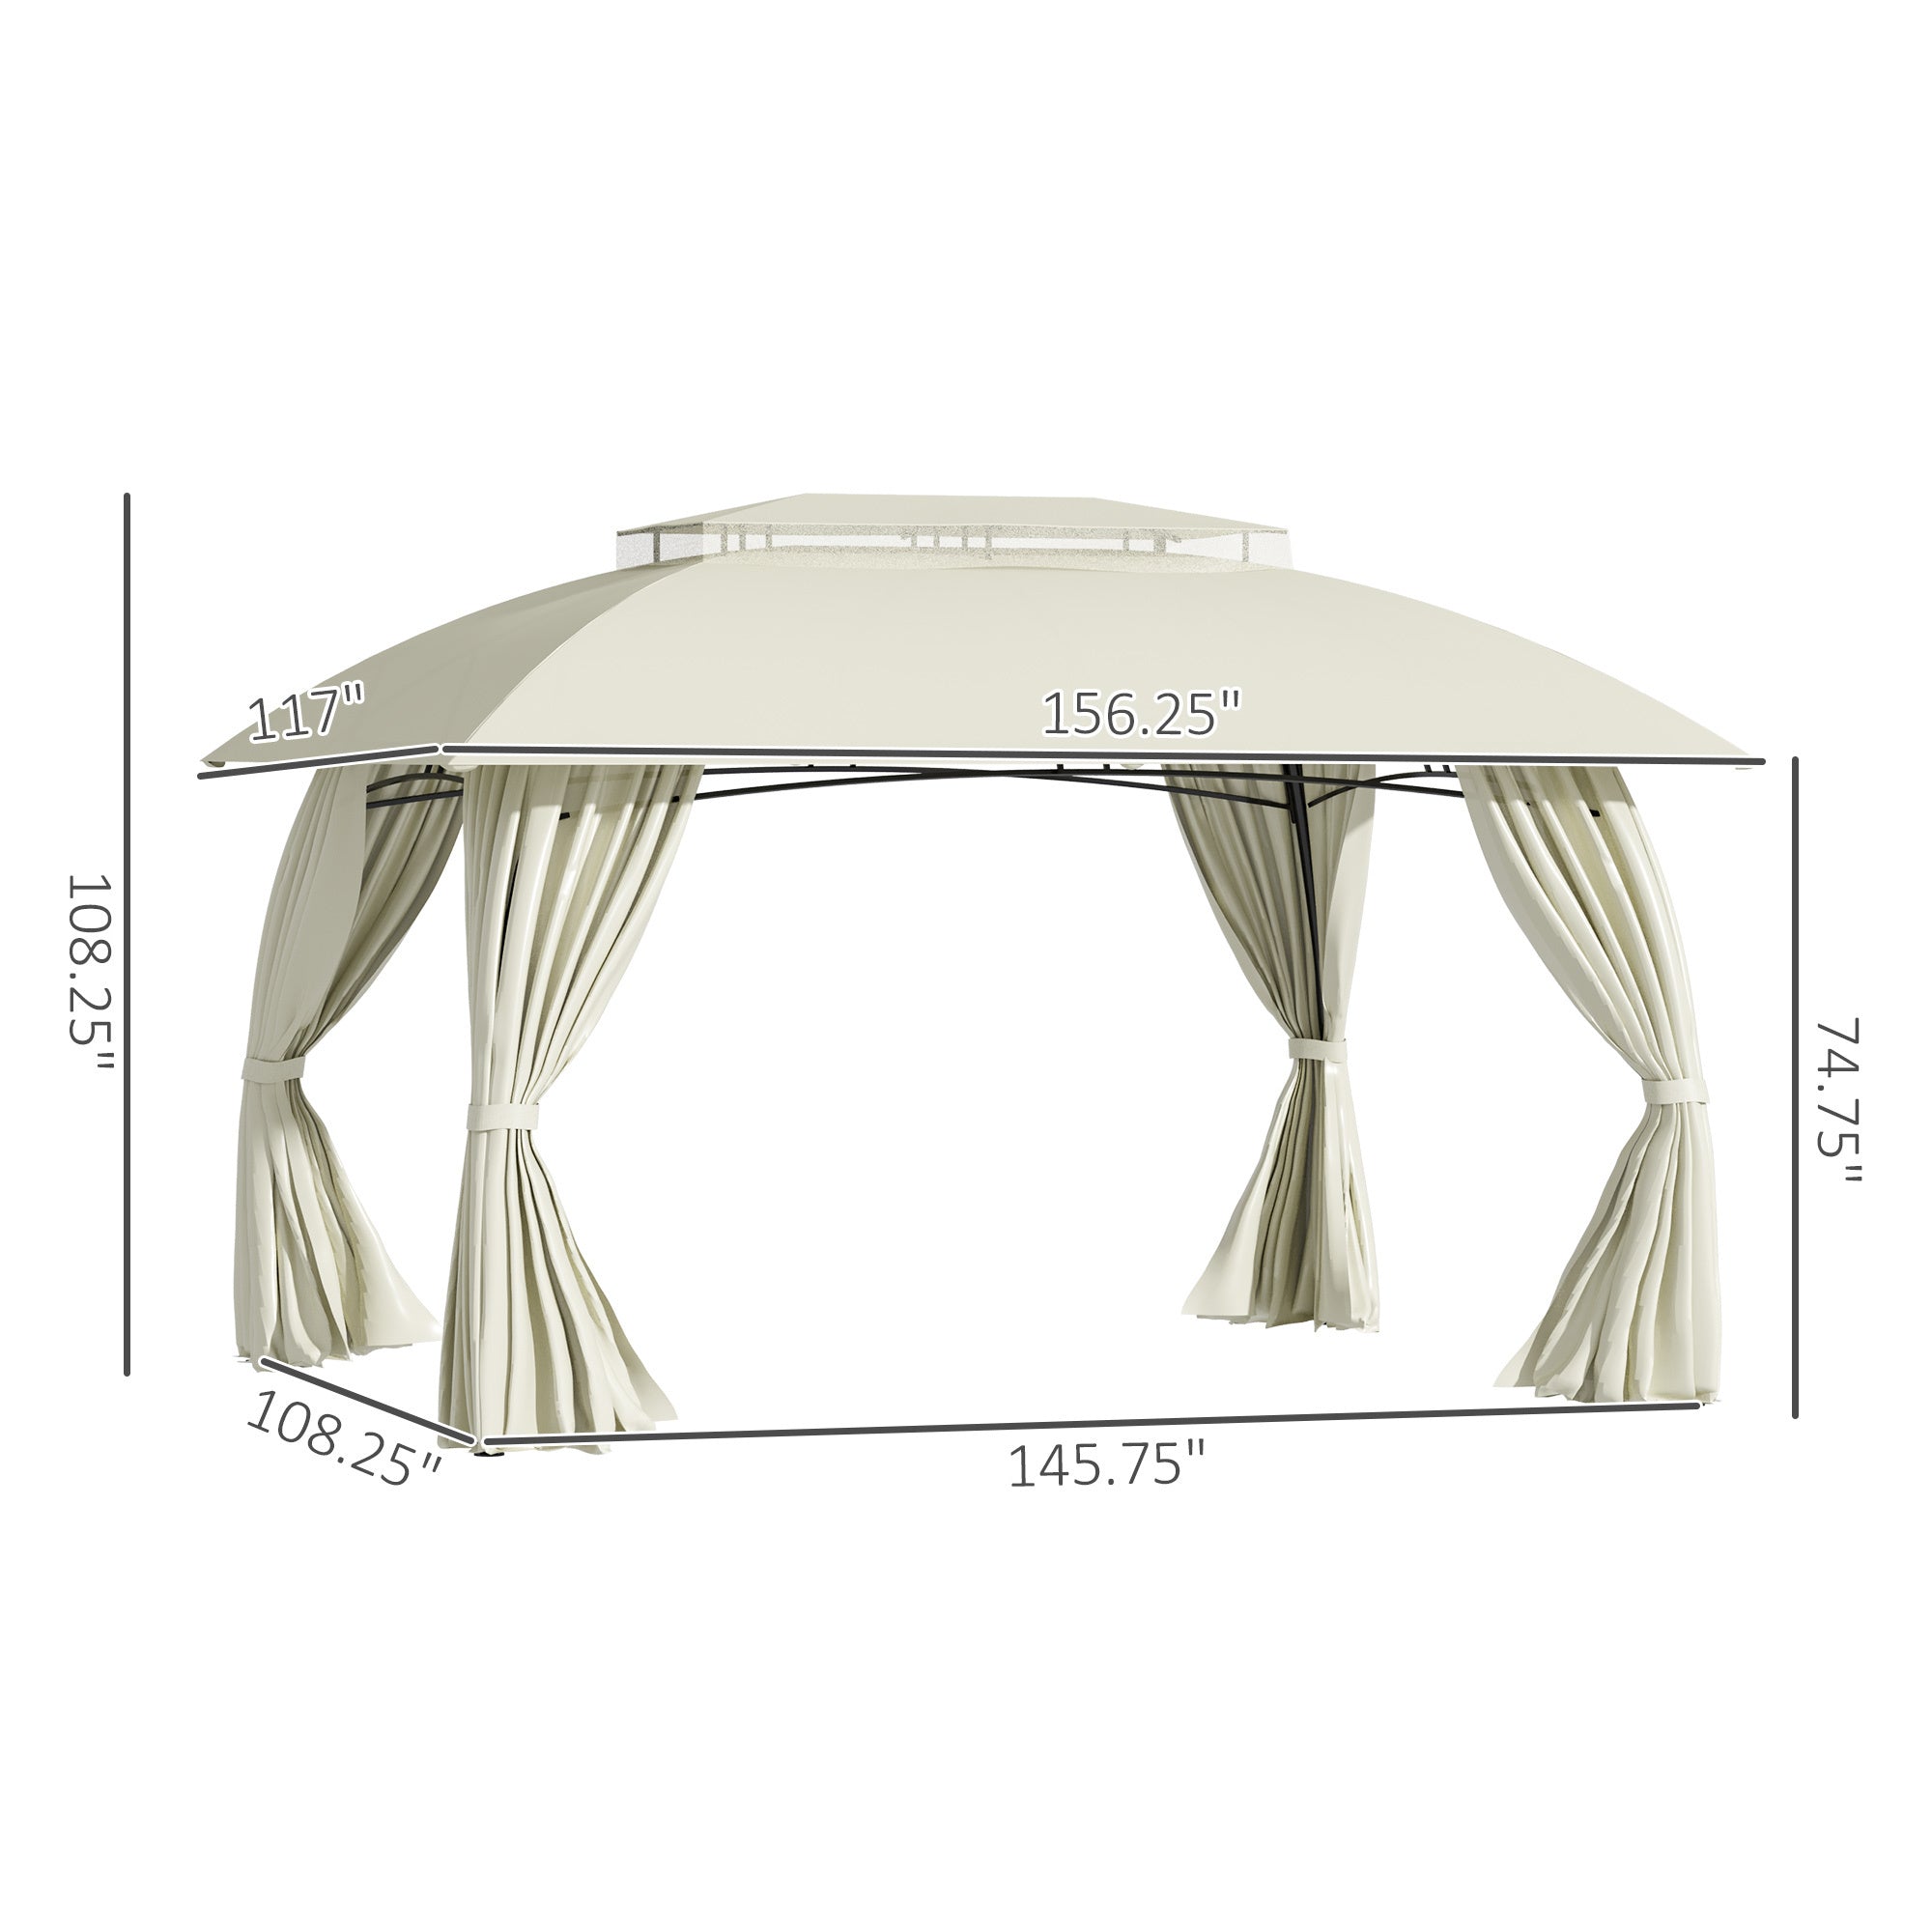 10'x13' Patio Gazebo Canopy, Double Vented Roof, Steel Frame, Curtain Sidewalls, Outdoor Sun Shade Shelter for Garden, Lawn, Backyard, Deck - Beige